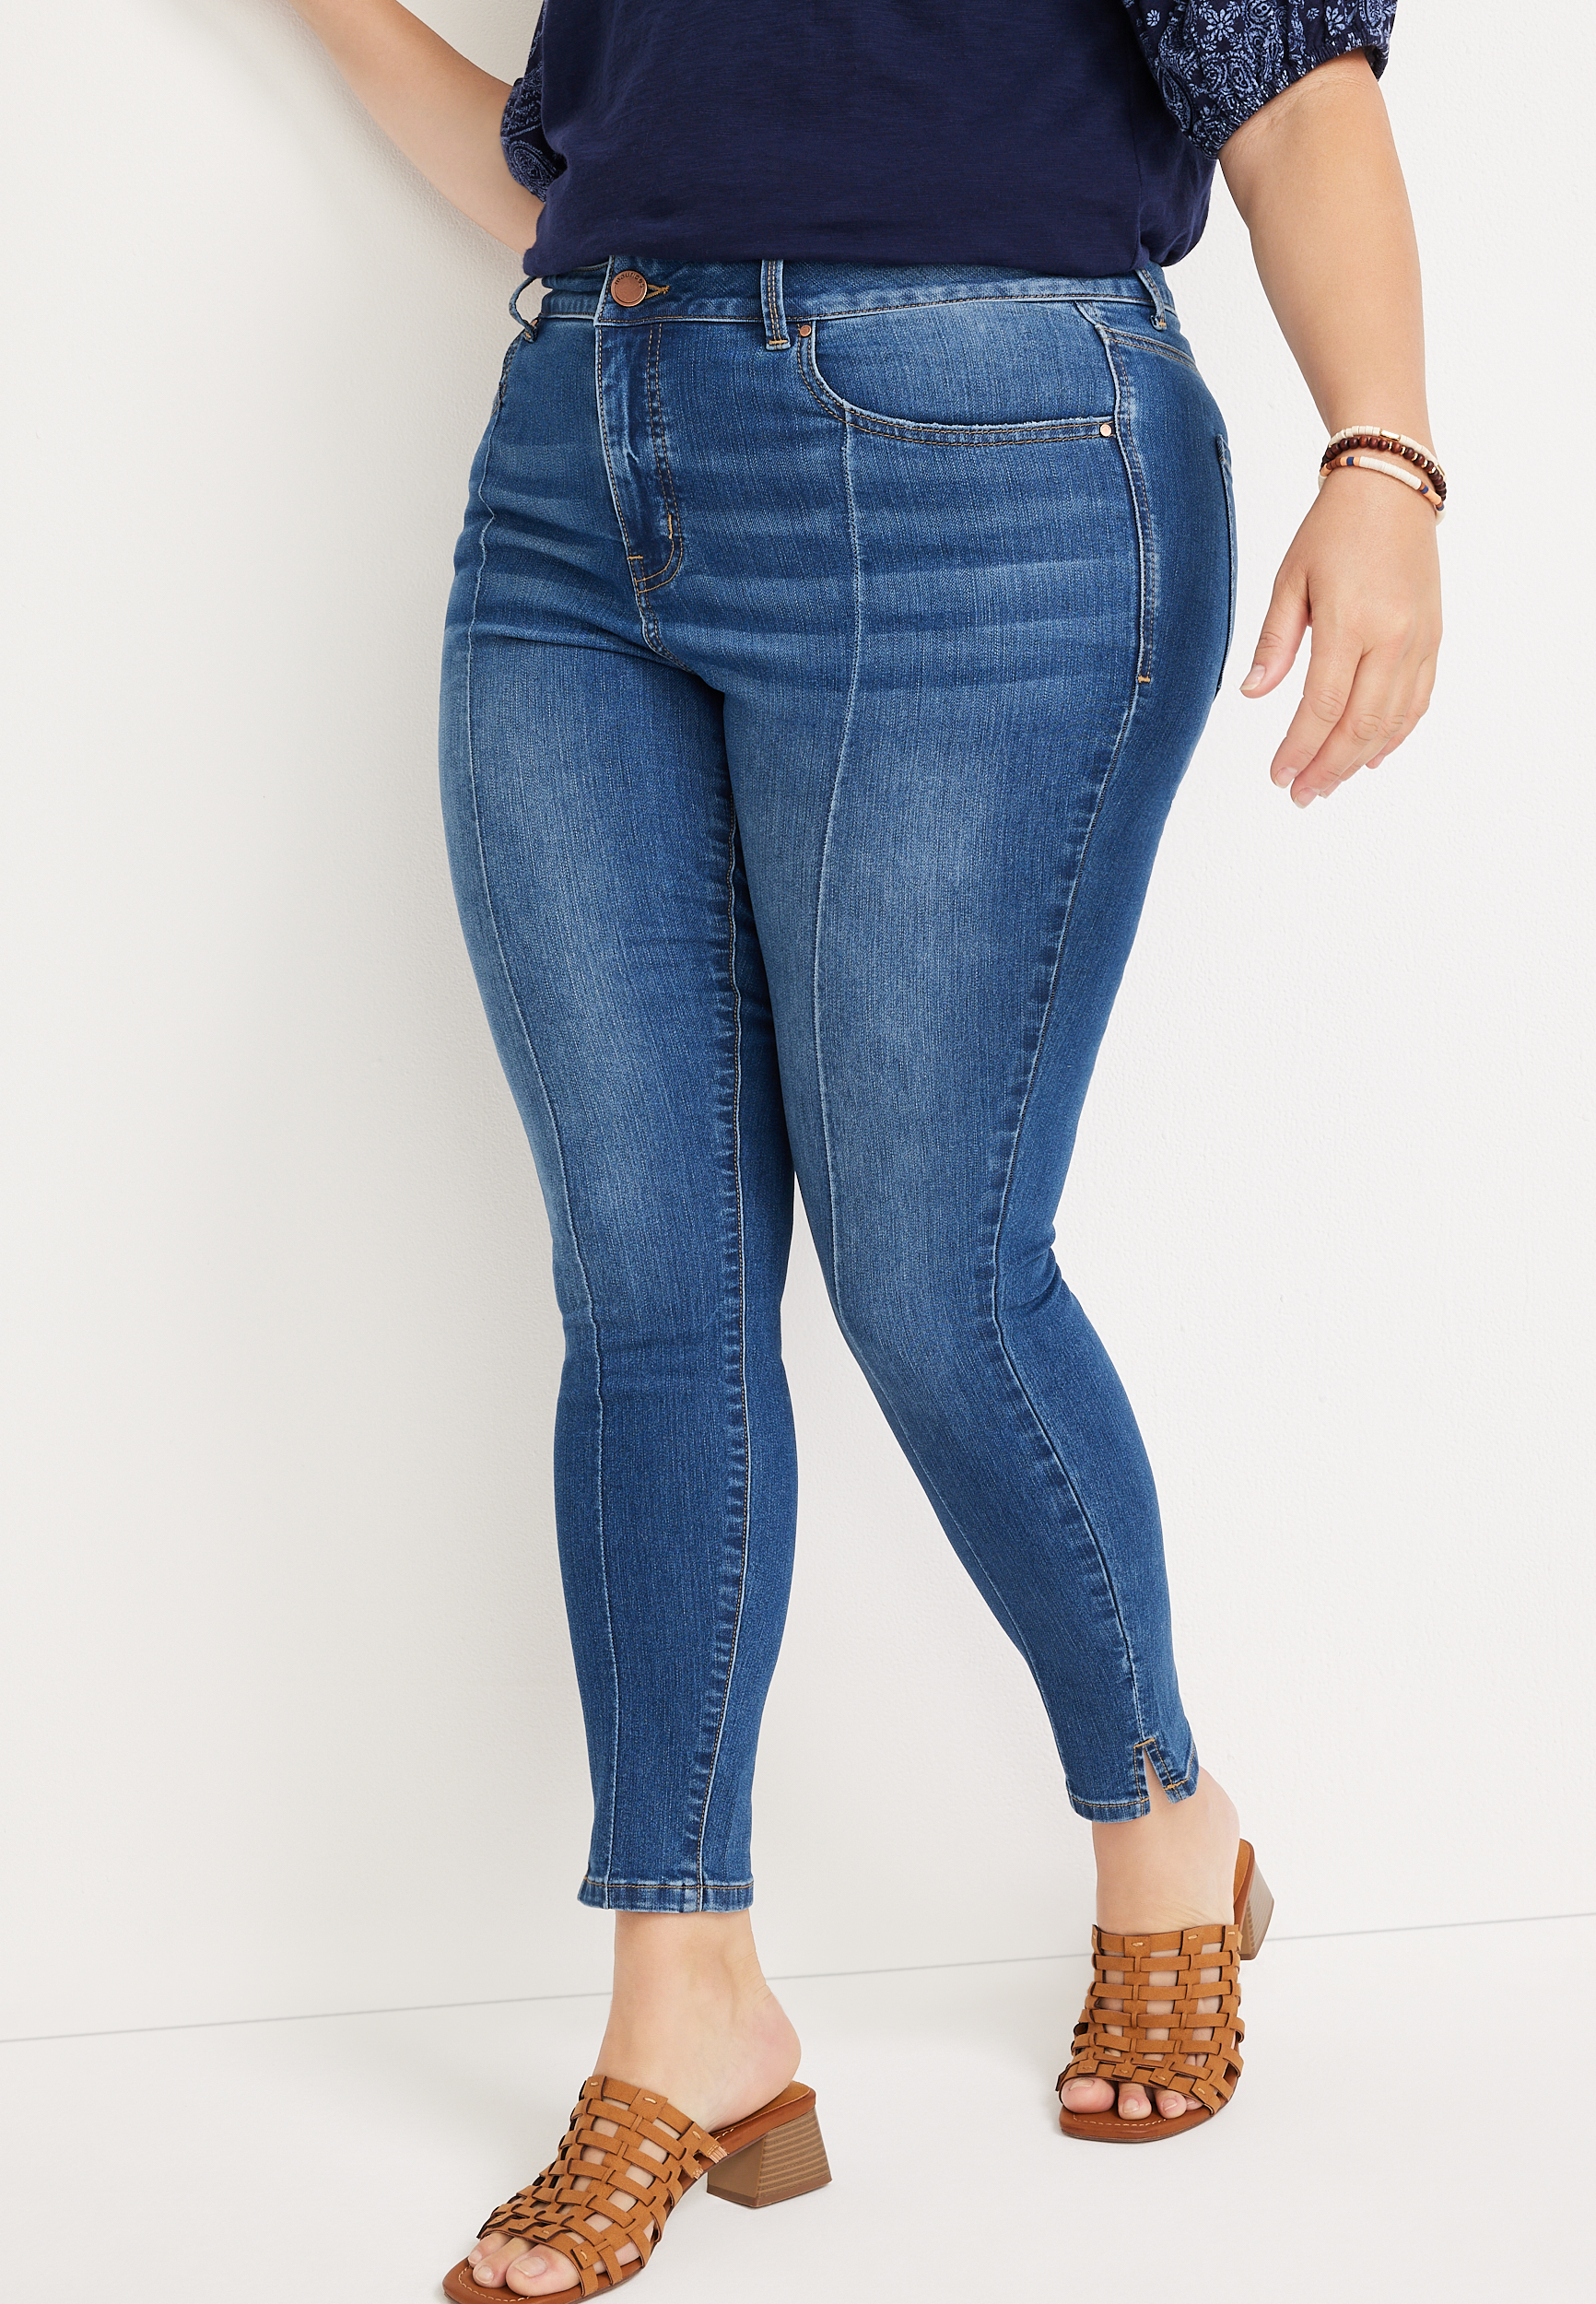 Shop Plus Size Skinny Jeans, Slimming Denim